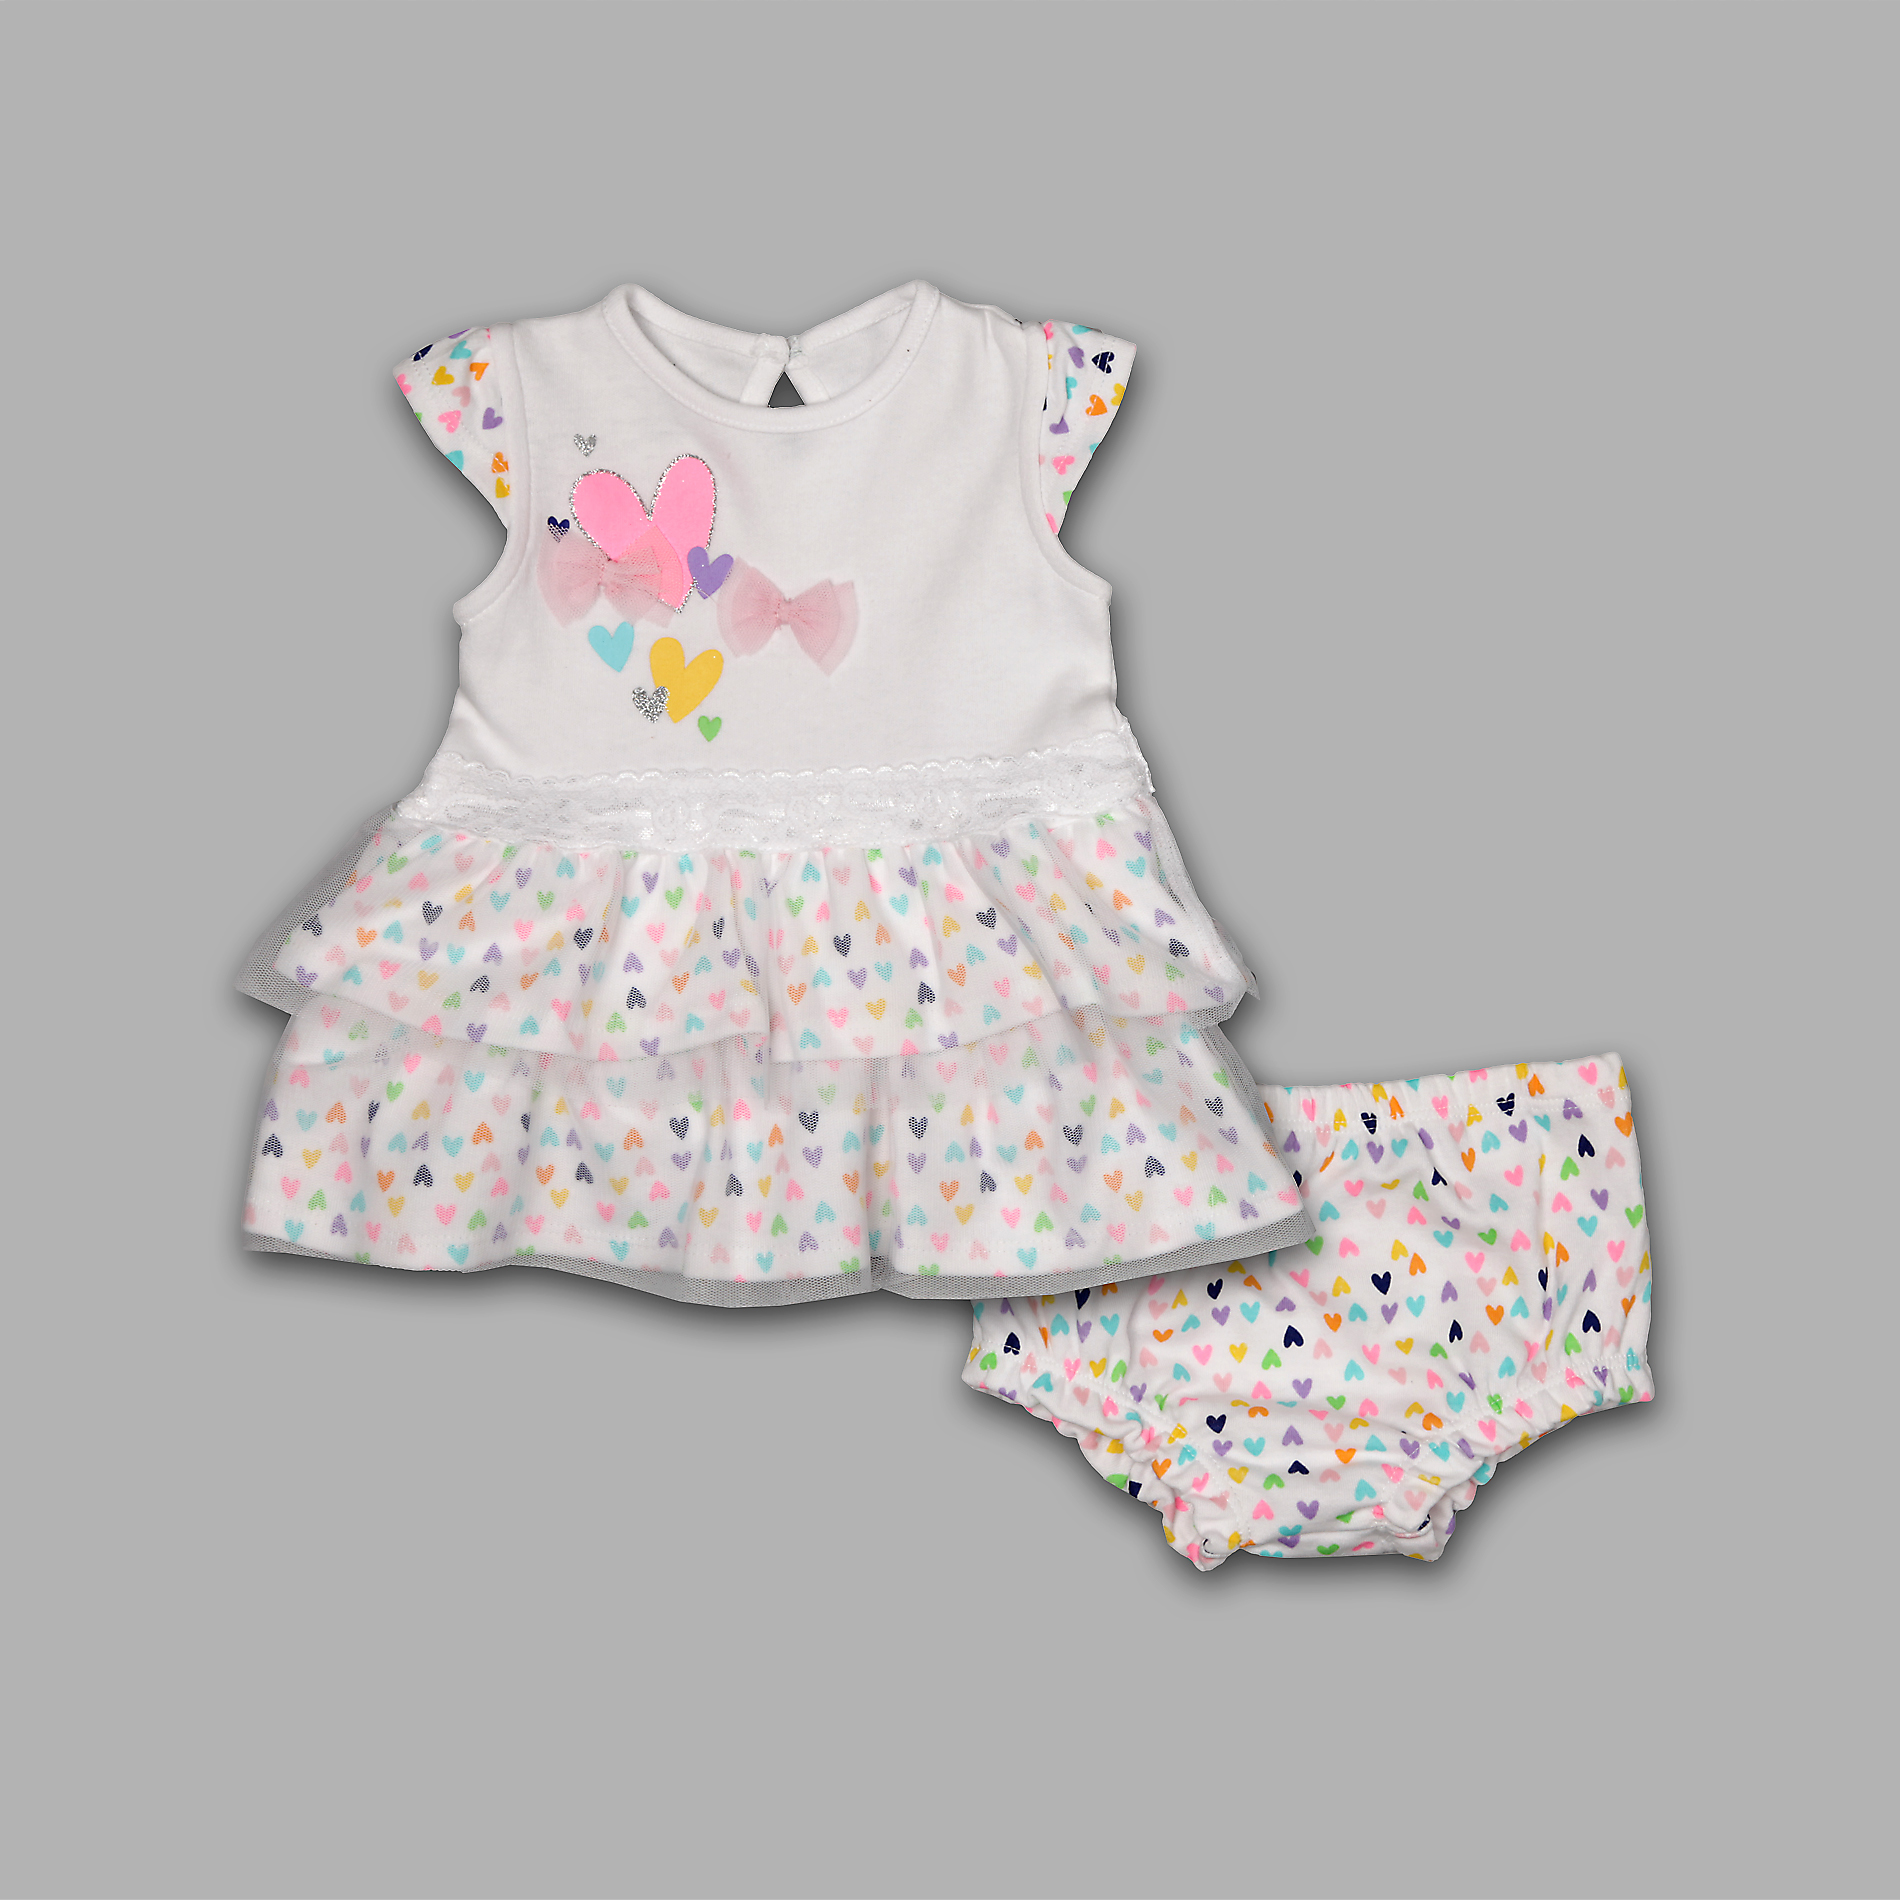 Small Wonders Infant & Toddler Girls' Jersey Lace Dress 2 Pc Set